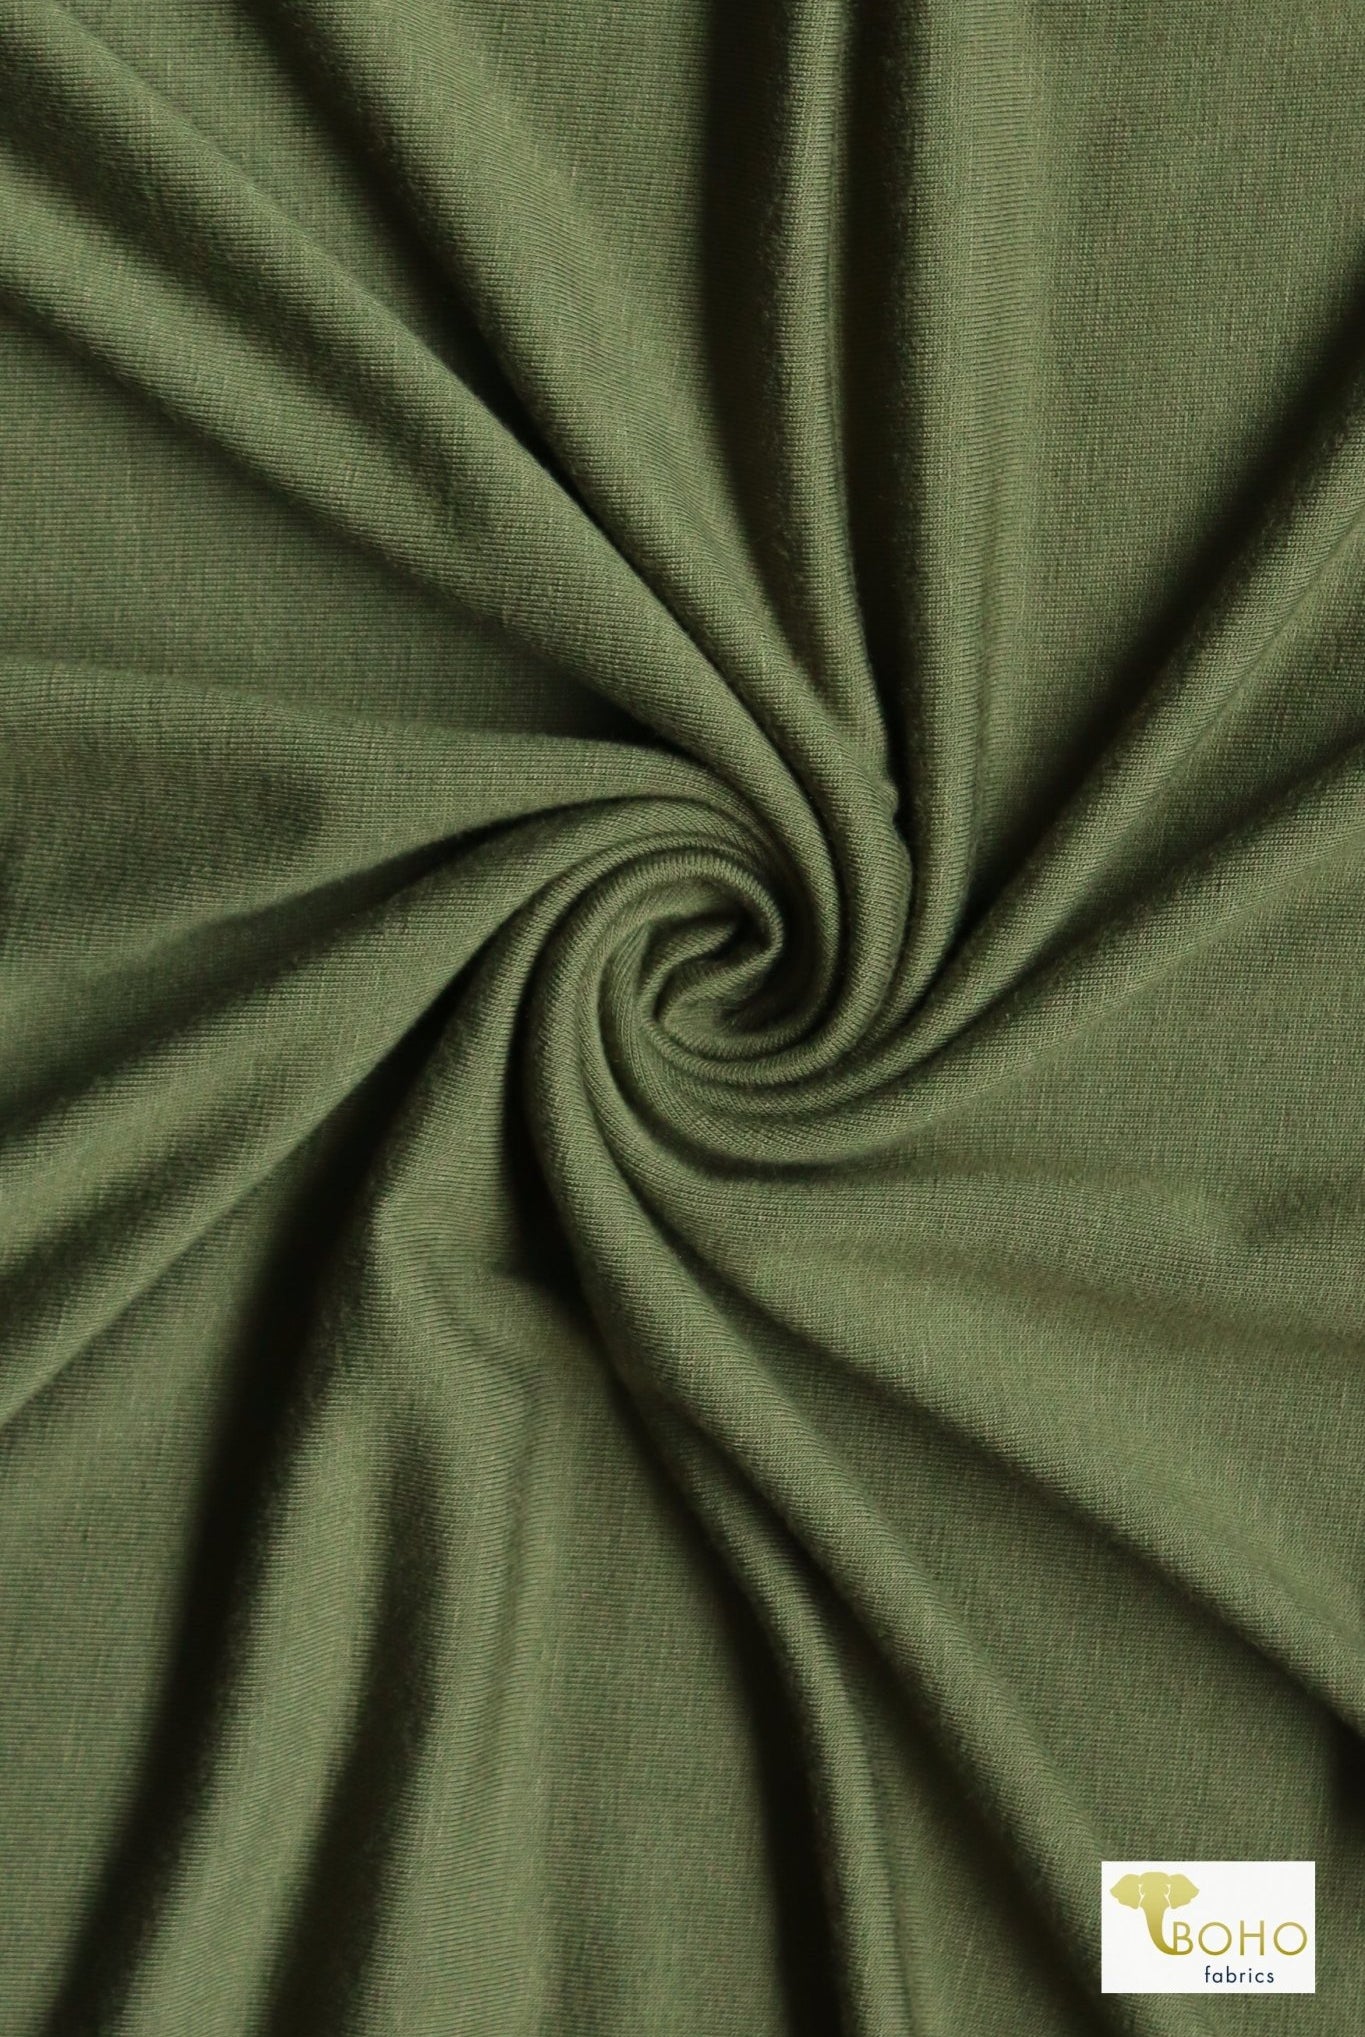 Peat Moss Green, Rayon Spandex Knit - Boho Fabrics